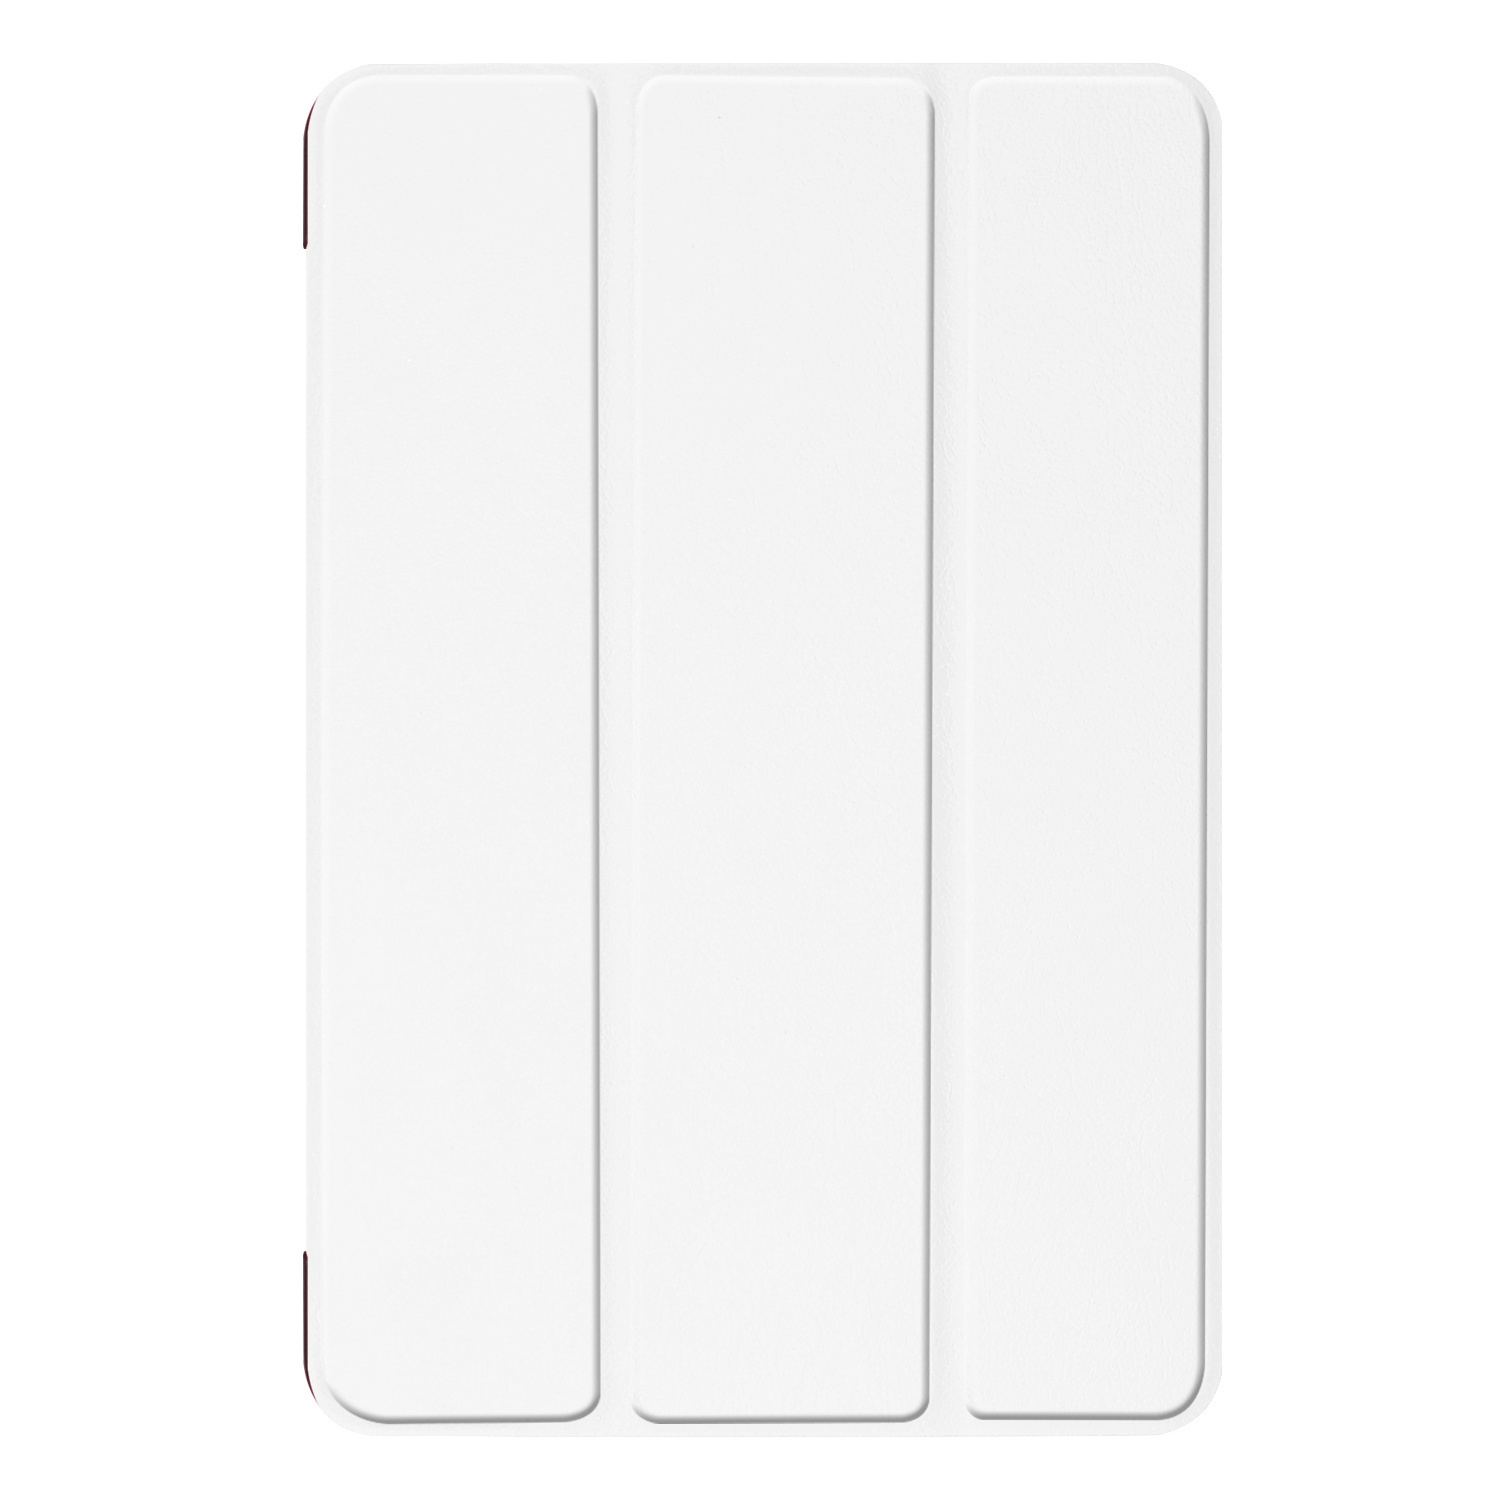 NoXx iPad Mini 6 Hoesje Plus Screenprotector Book Case Cover Plus Screen Protector - Wit